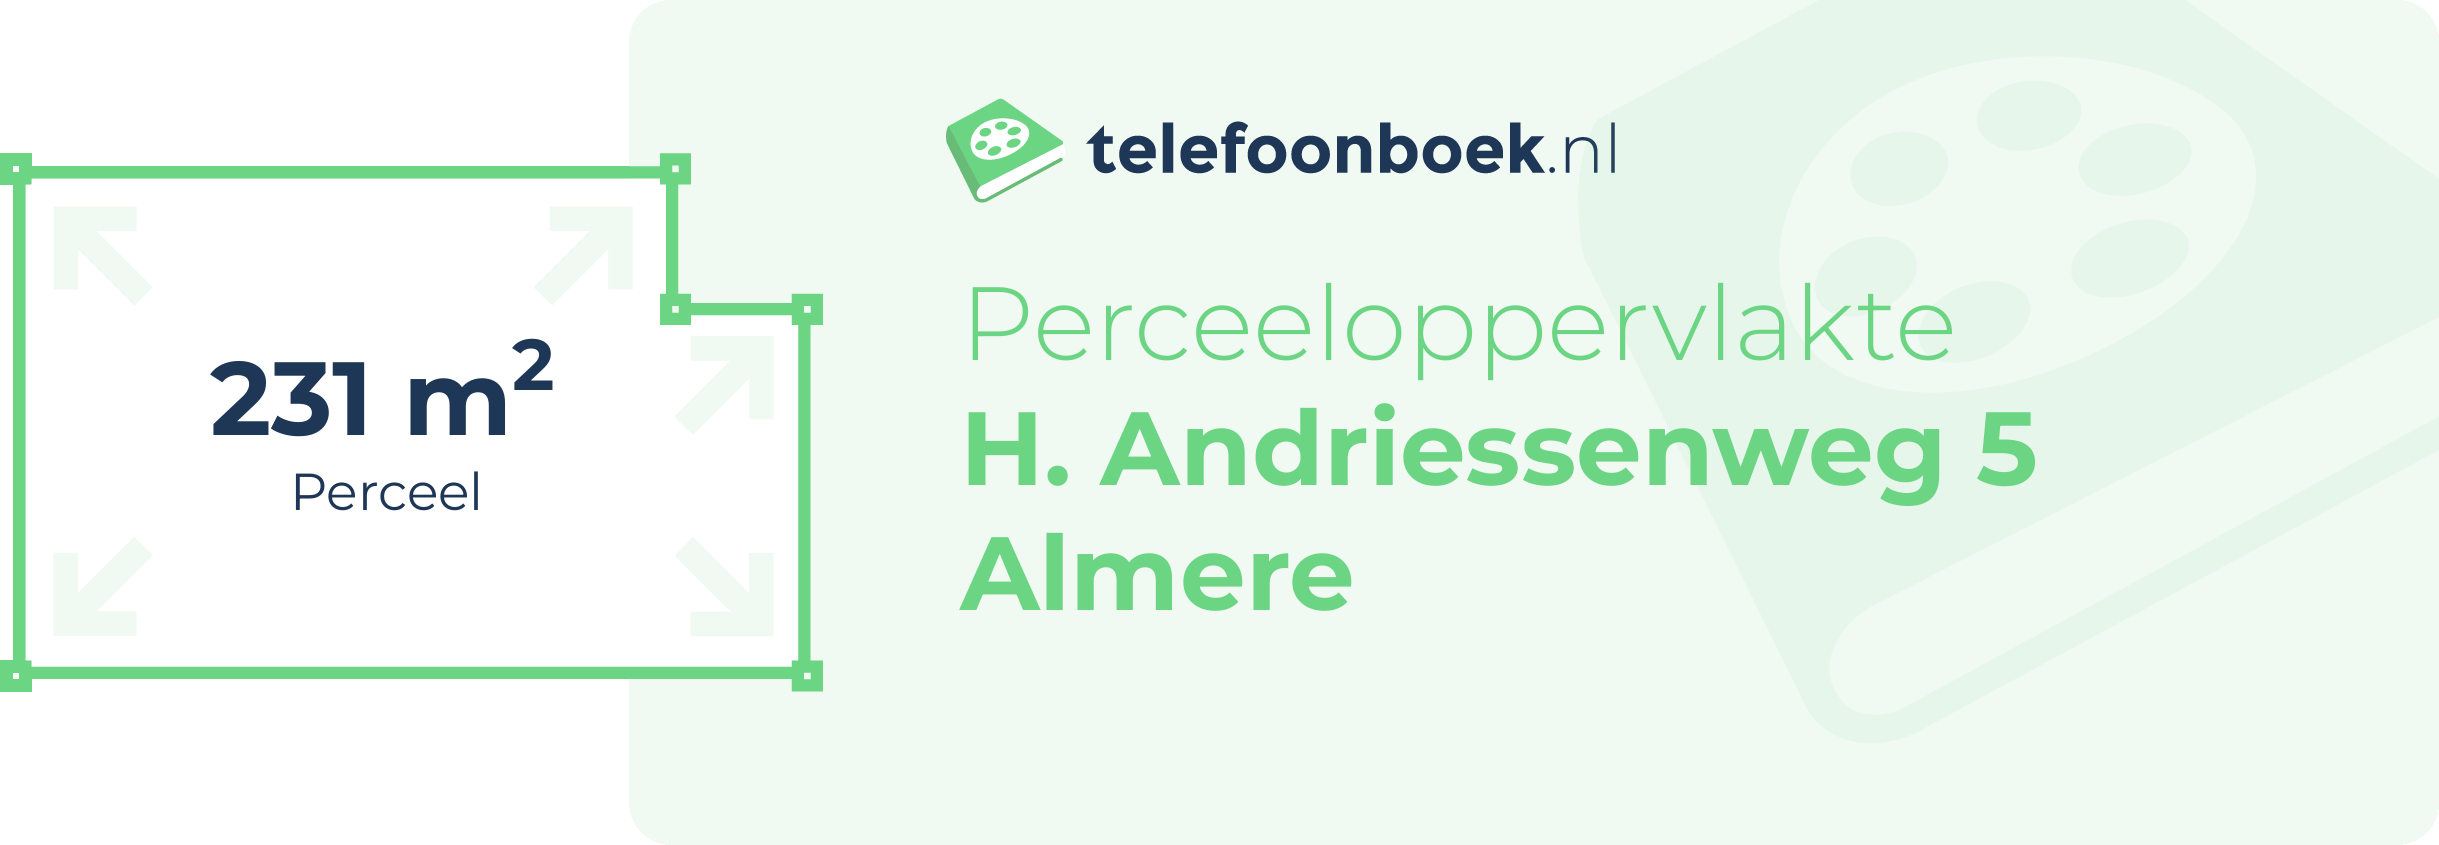 Perceeloppervlakte H. Andriessenweg 5 Almere